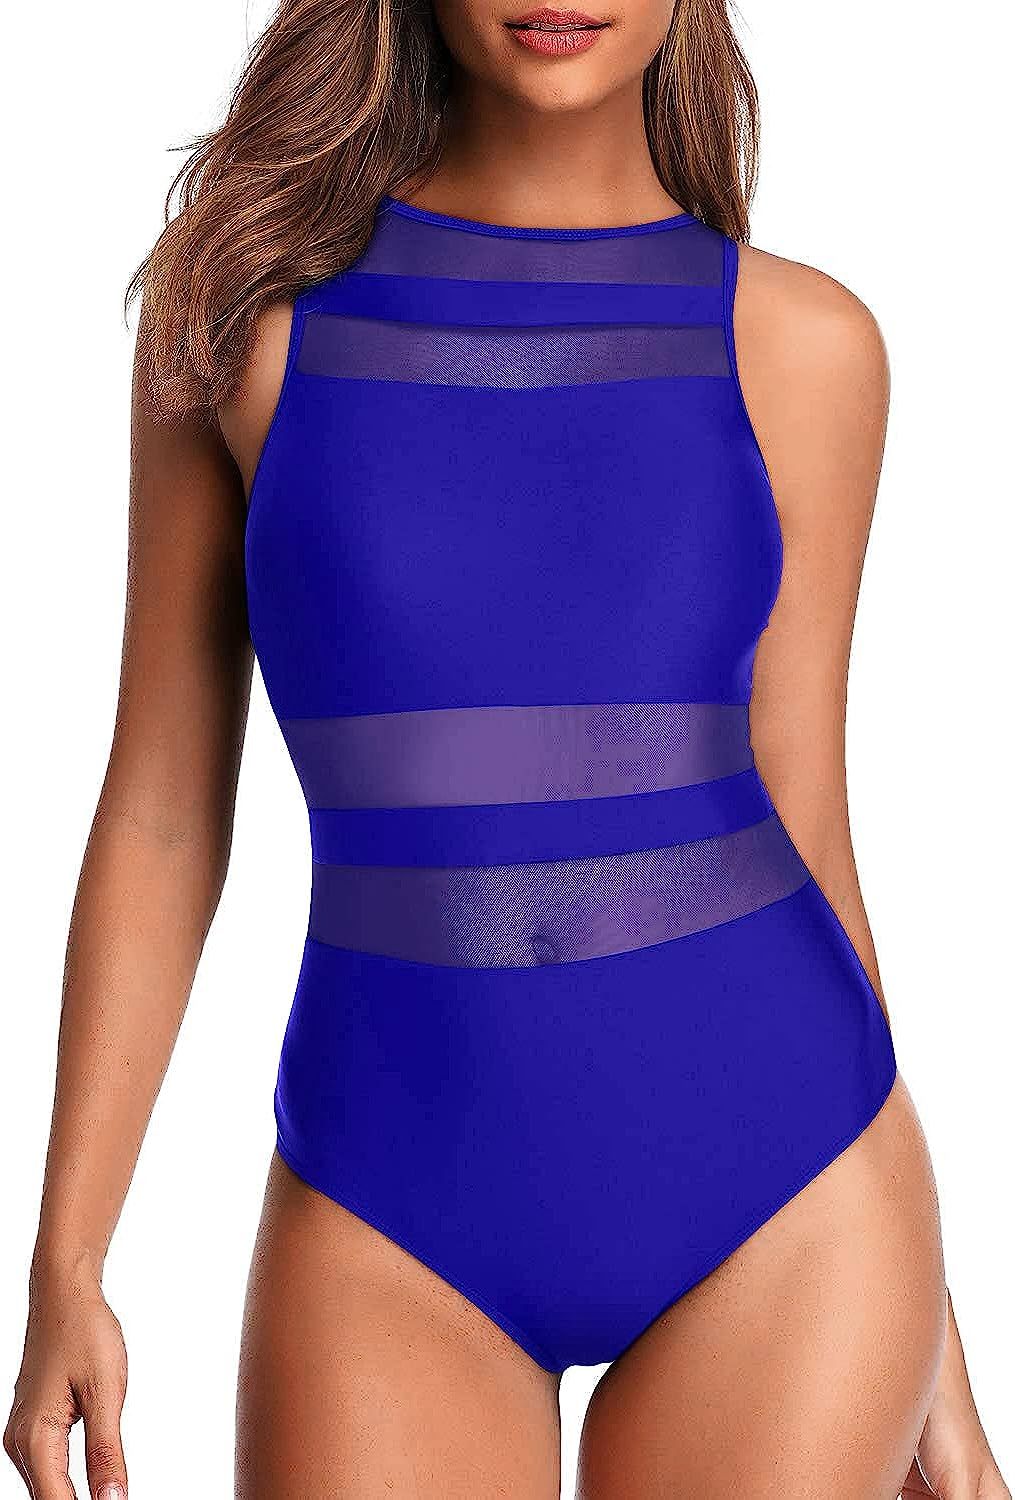 Holipick Women High Neck One Piece Swimsuits for Women Mesh Bathing Suits Open Back Swimwear | Amazon (US)